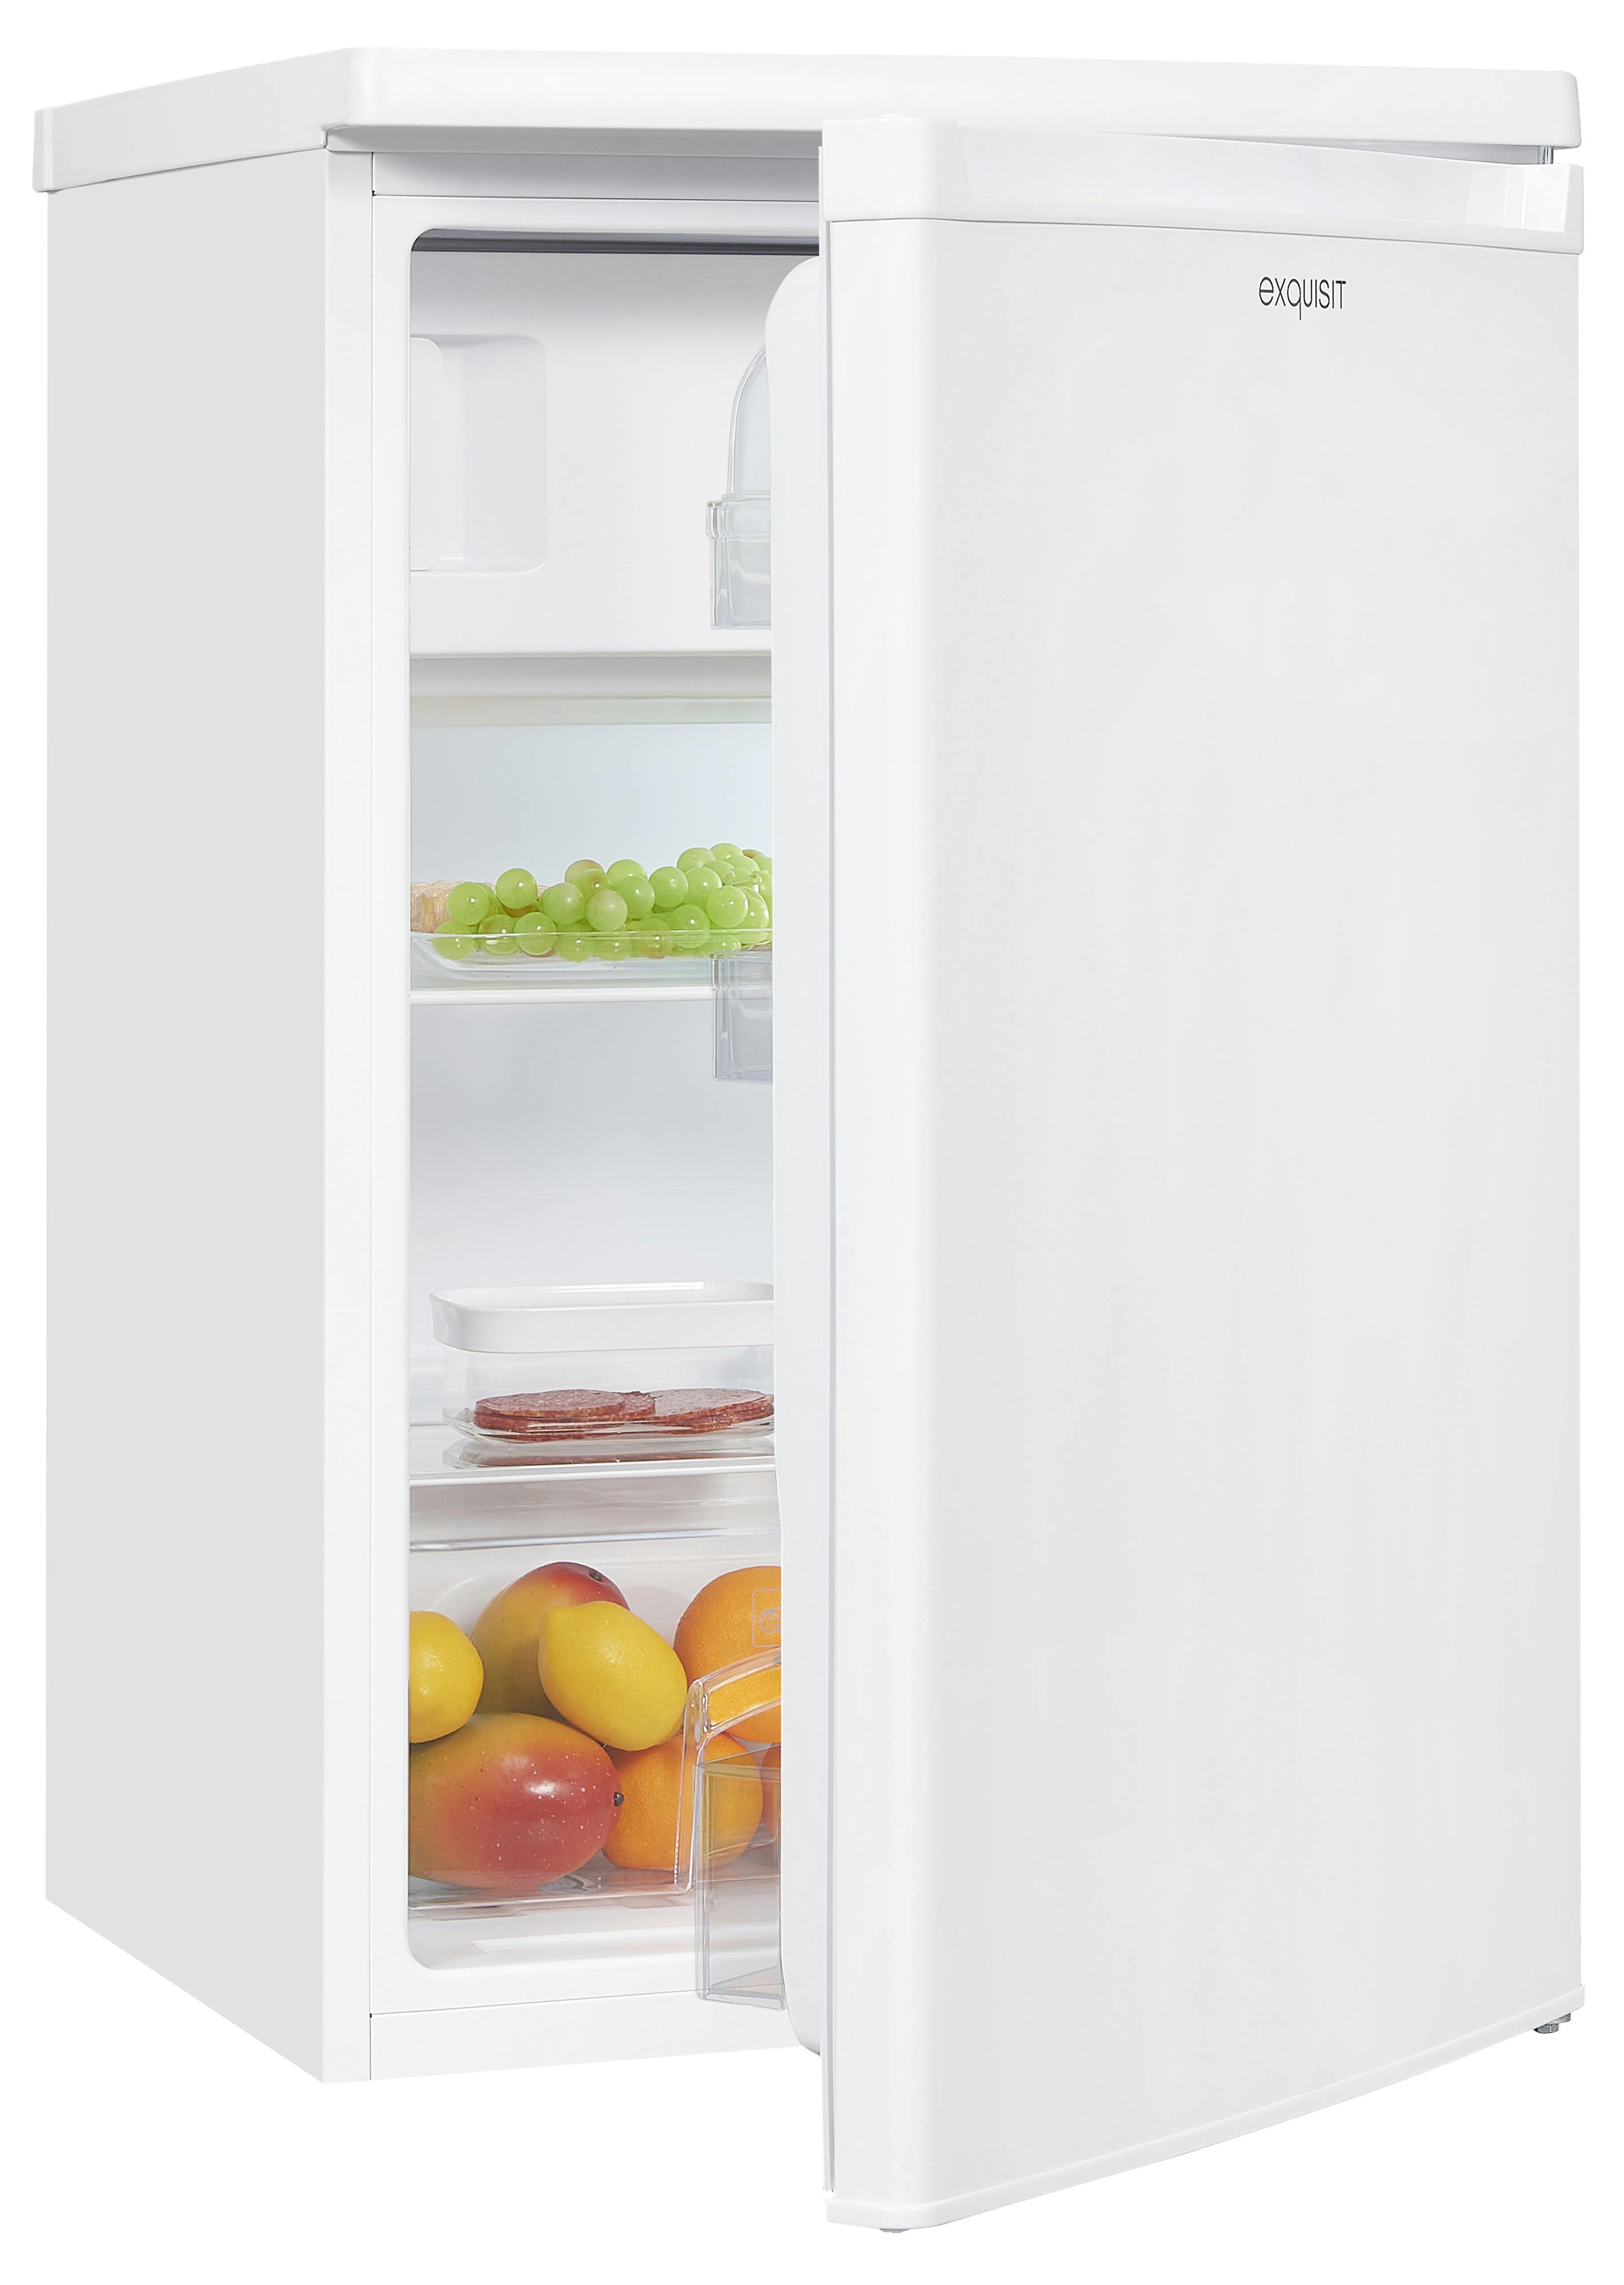 EXQUISIT Kühlschrank Weiß KS 16-4.3 RVA++ neu 5 Jahre Garantie *inkl 